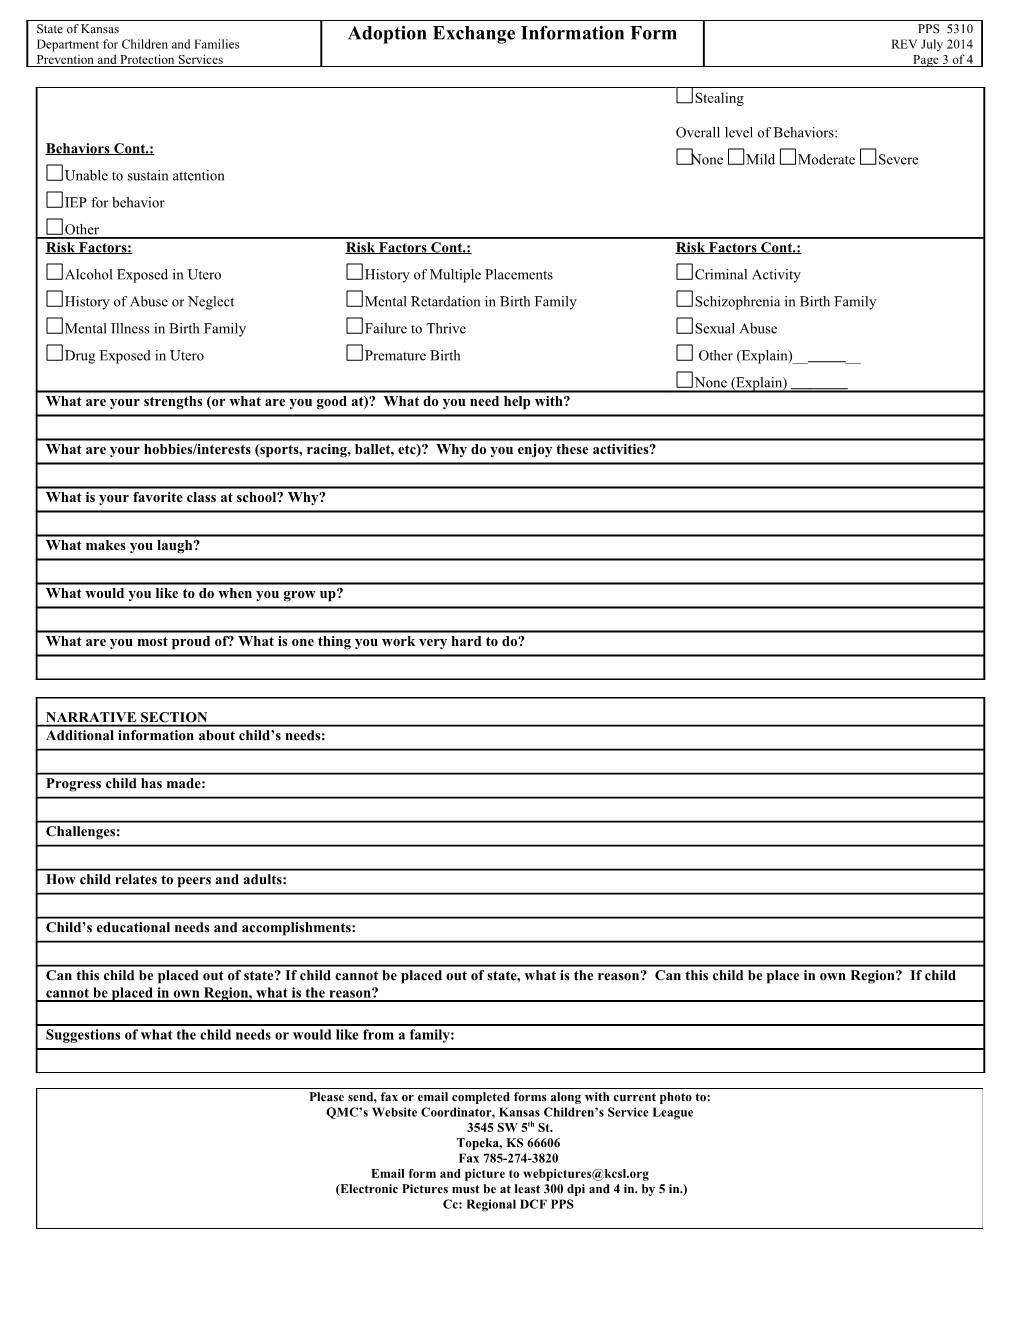 Adoption Exchange Information Form